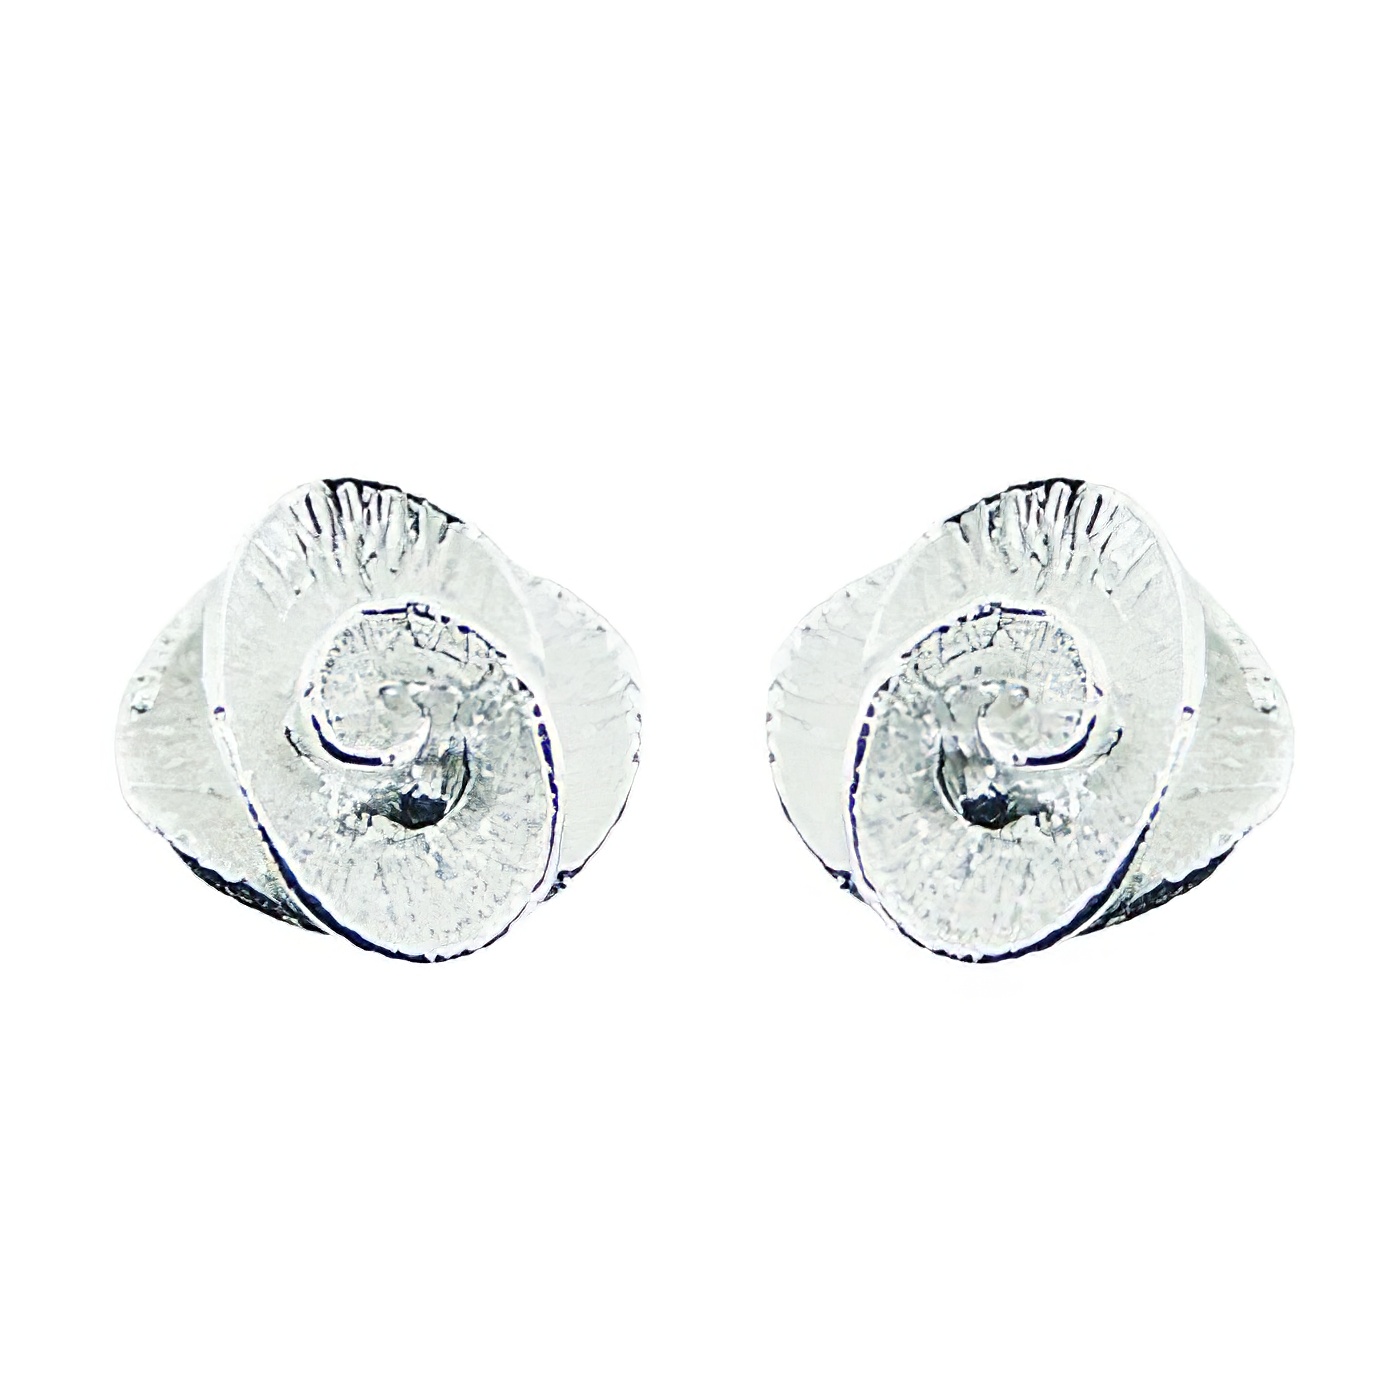 Adorable Twirled Flowers 925 Sterling Silver Stud Earrings by BeYindi 